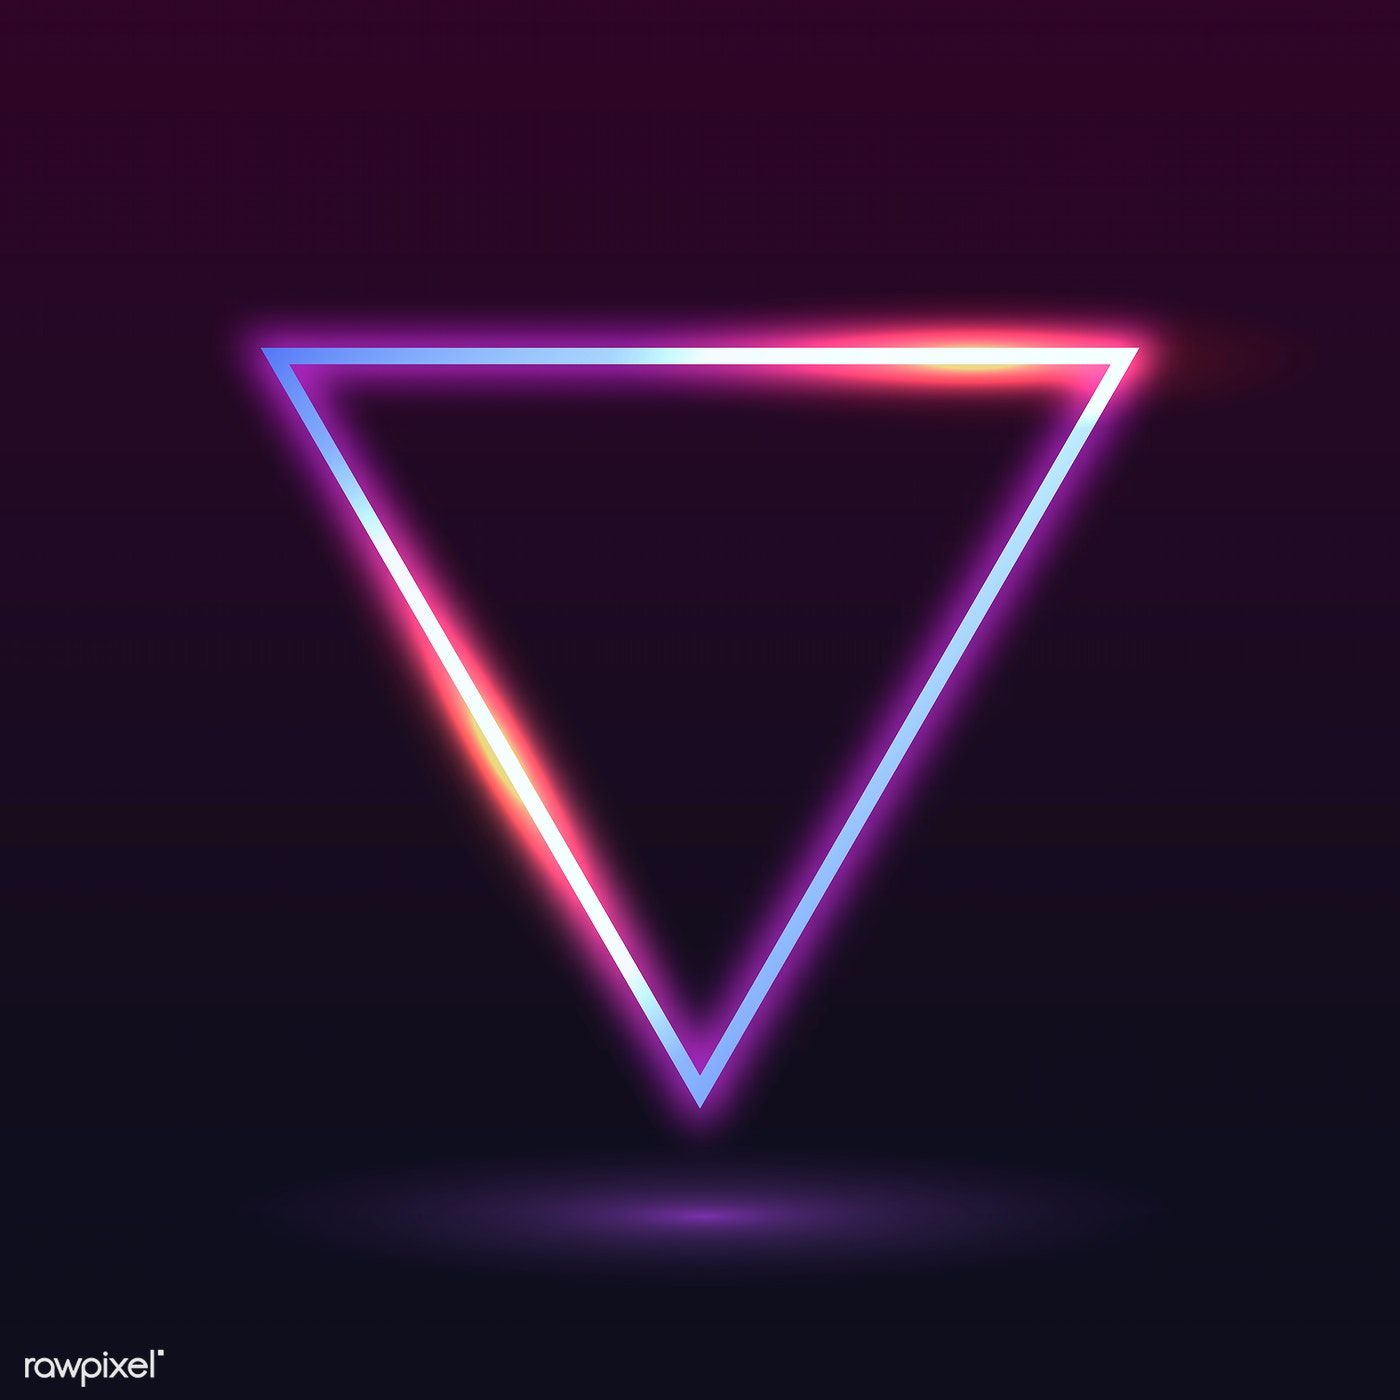 Retro neon triangle badge vector. free image